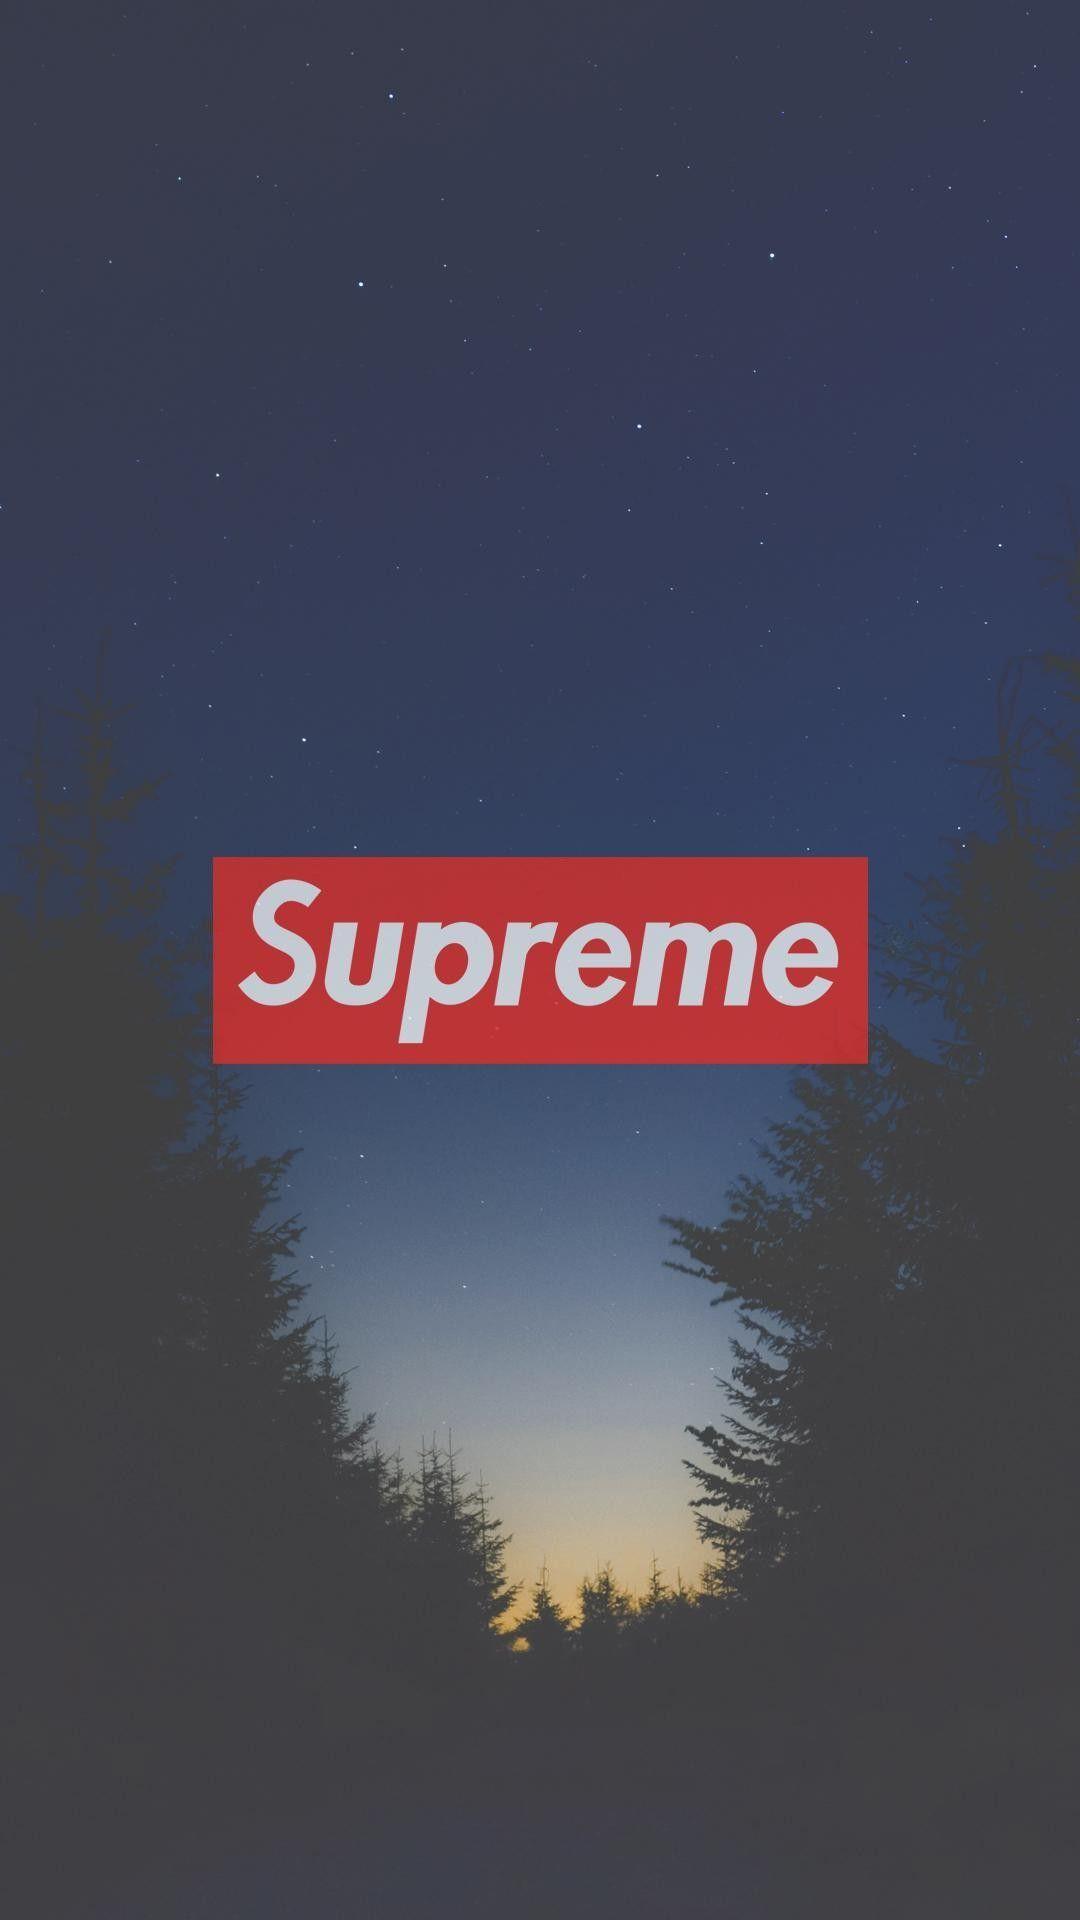 Supreme Sky Logo - Random wallpaper. Supreme wallpaper